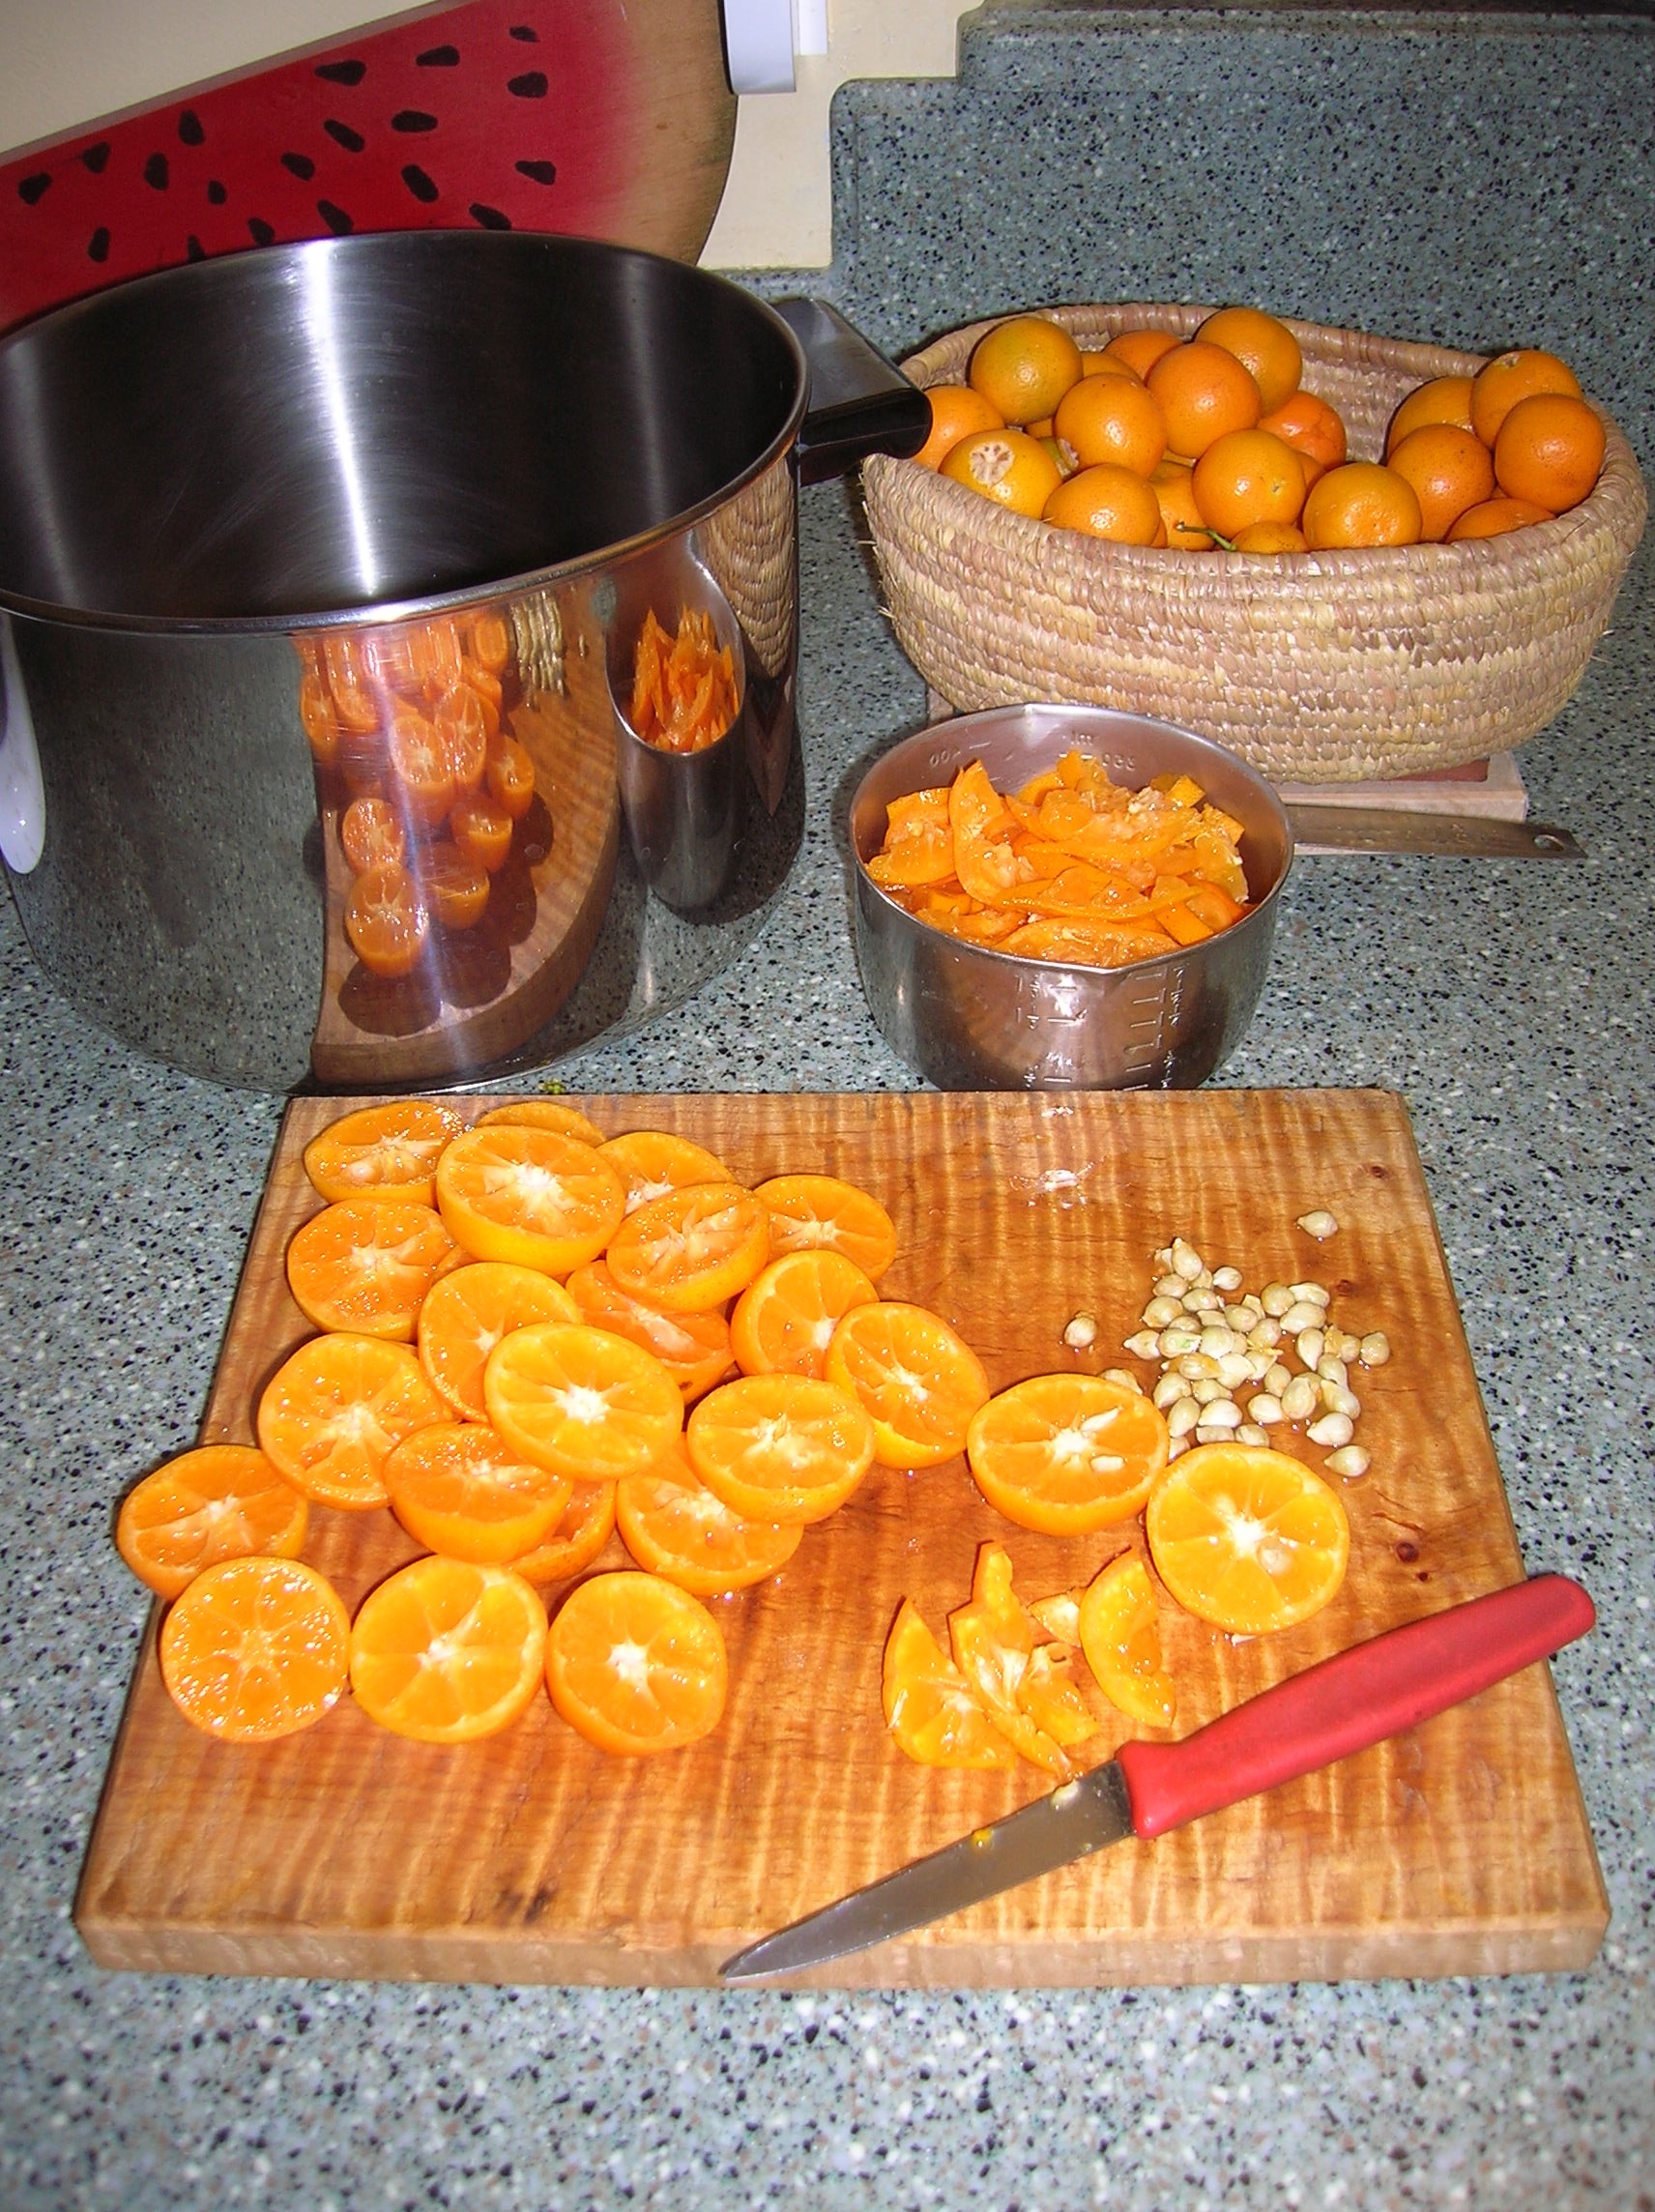 Making Marmalade From The Calamondins